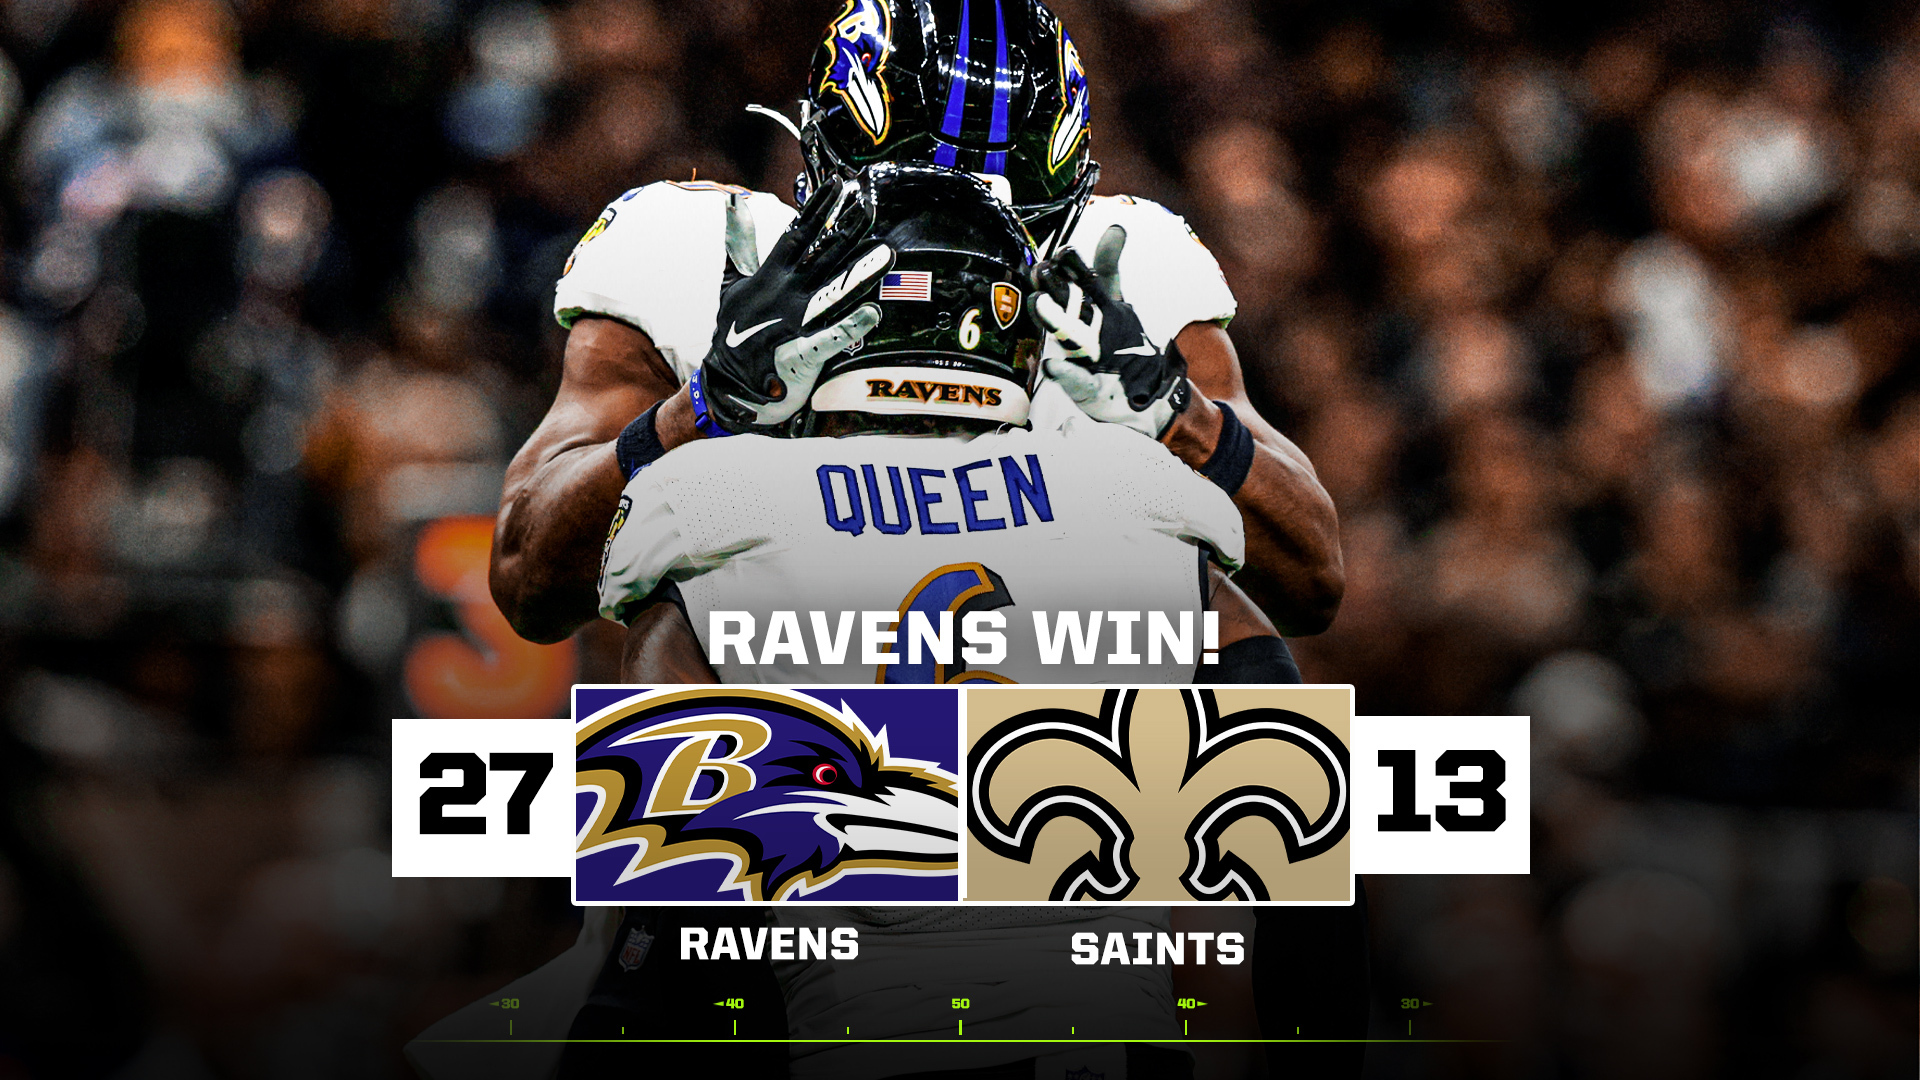 Ravens' Defense Silences Saints in 27-13 Monday Night Win